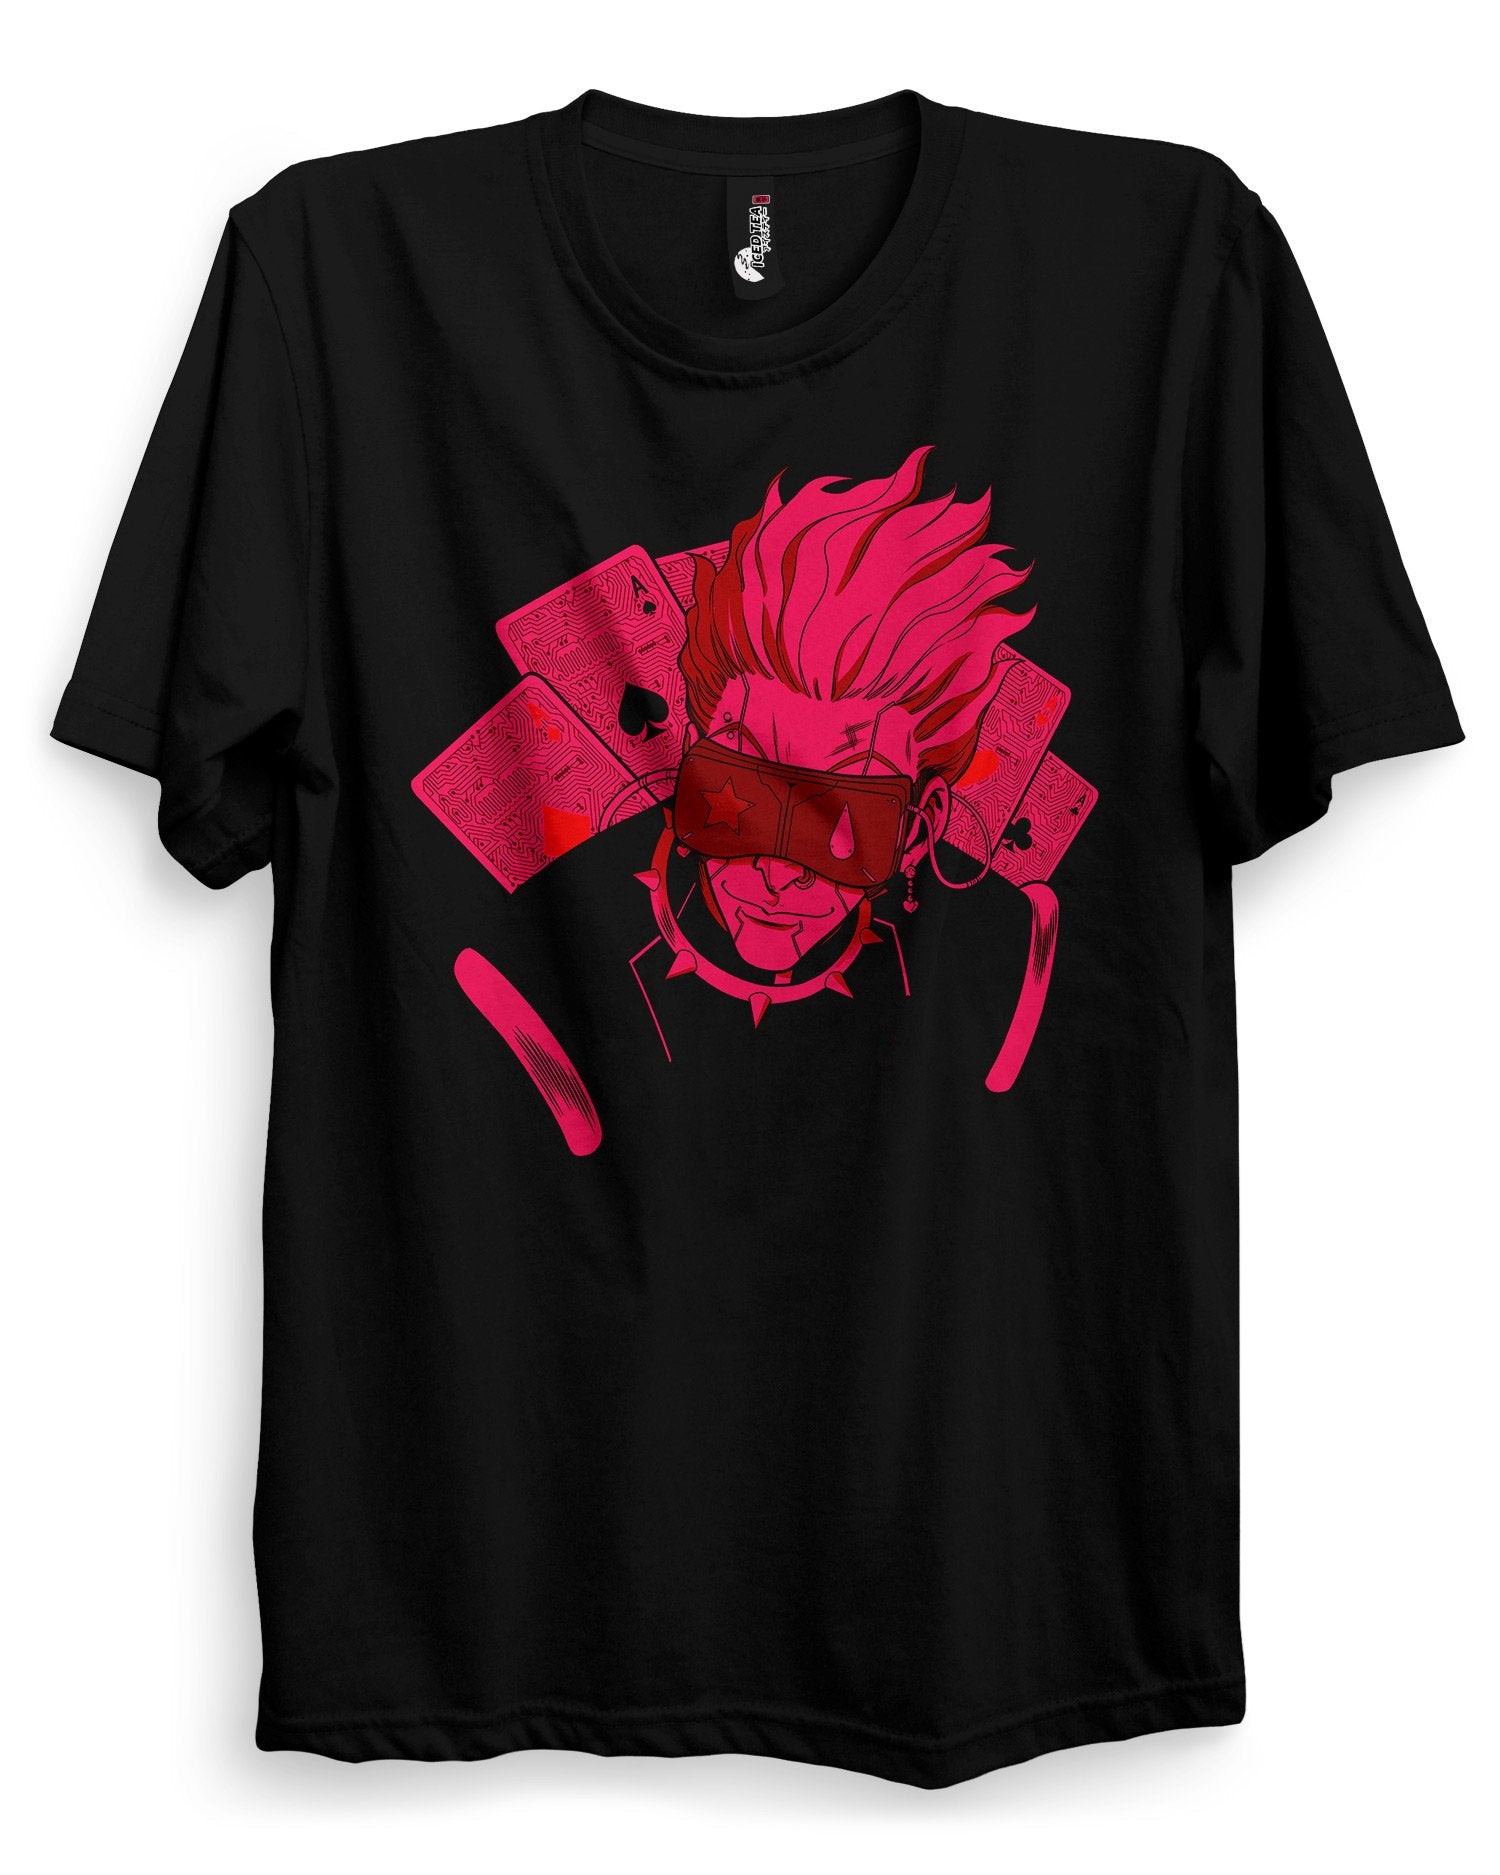 HISOKA (NEON) - Cyberpunk Anime T-Shirt - Dark Aesthetics and Anime Clothing Streetwear